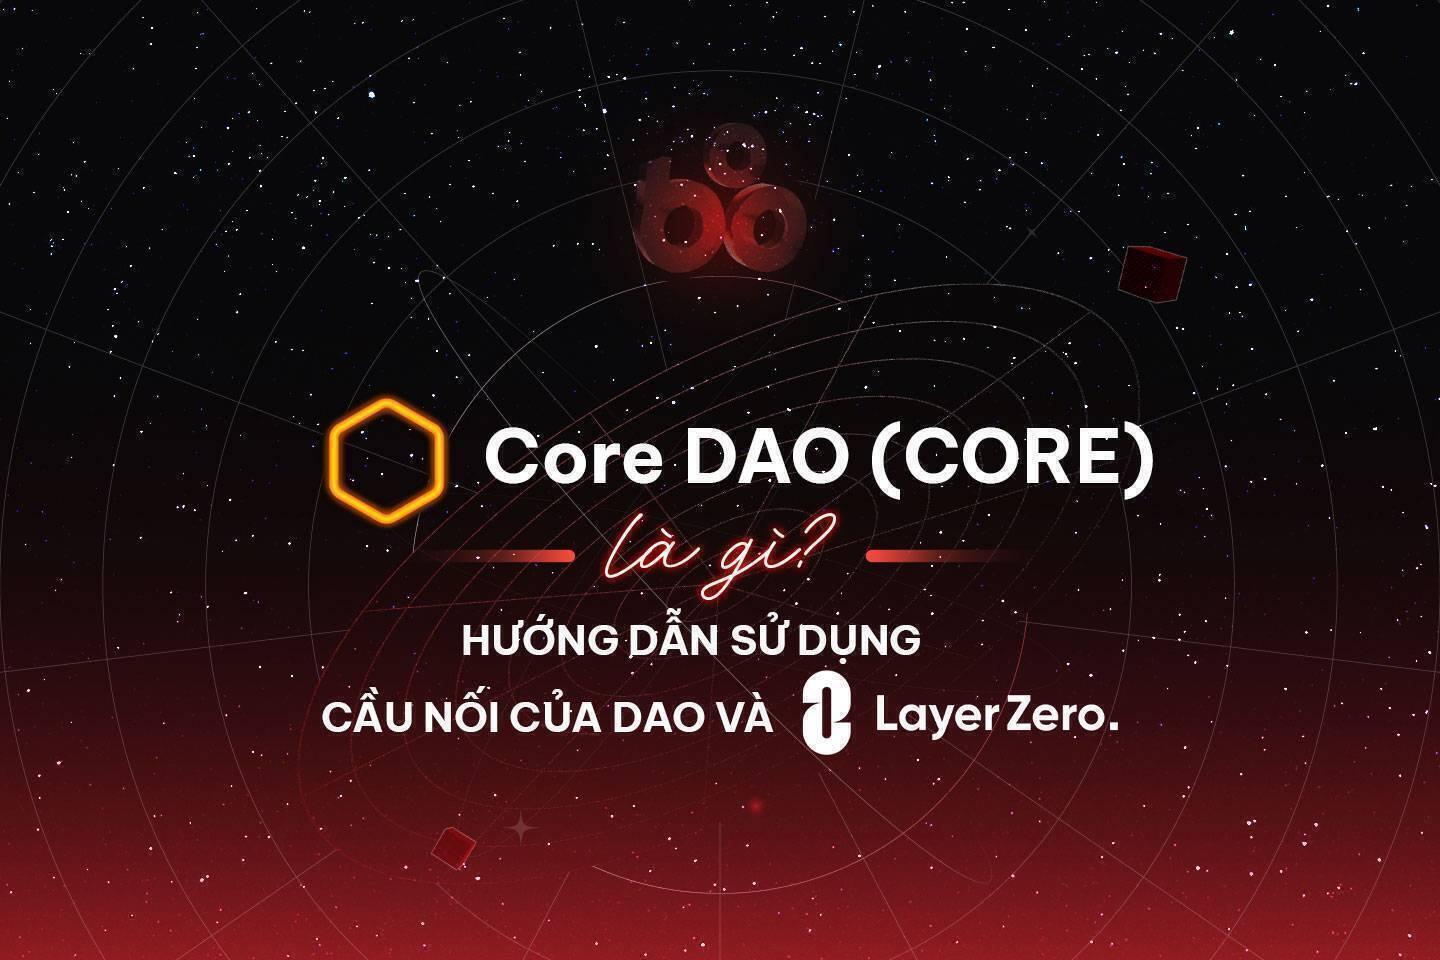 core-dao-core-la-gi-huong-dan-su-dung-cau-noi-cua-dao-va-layerzero